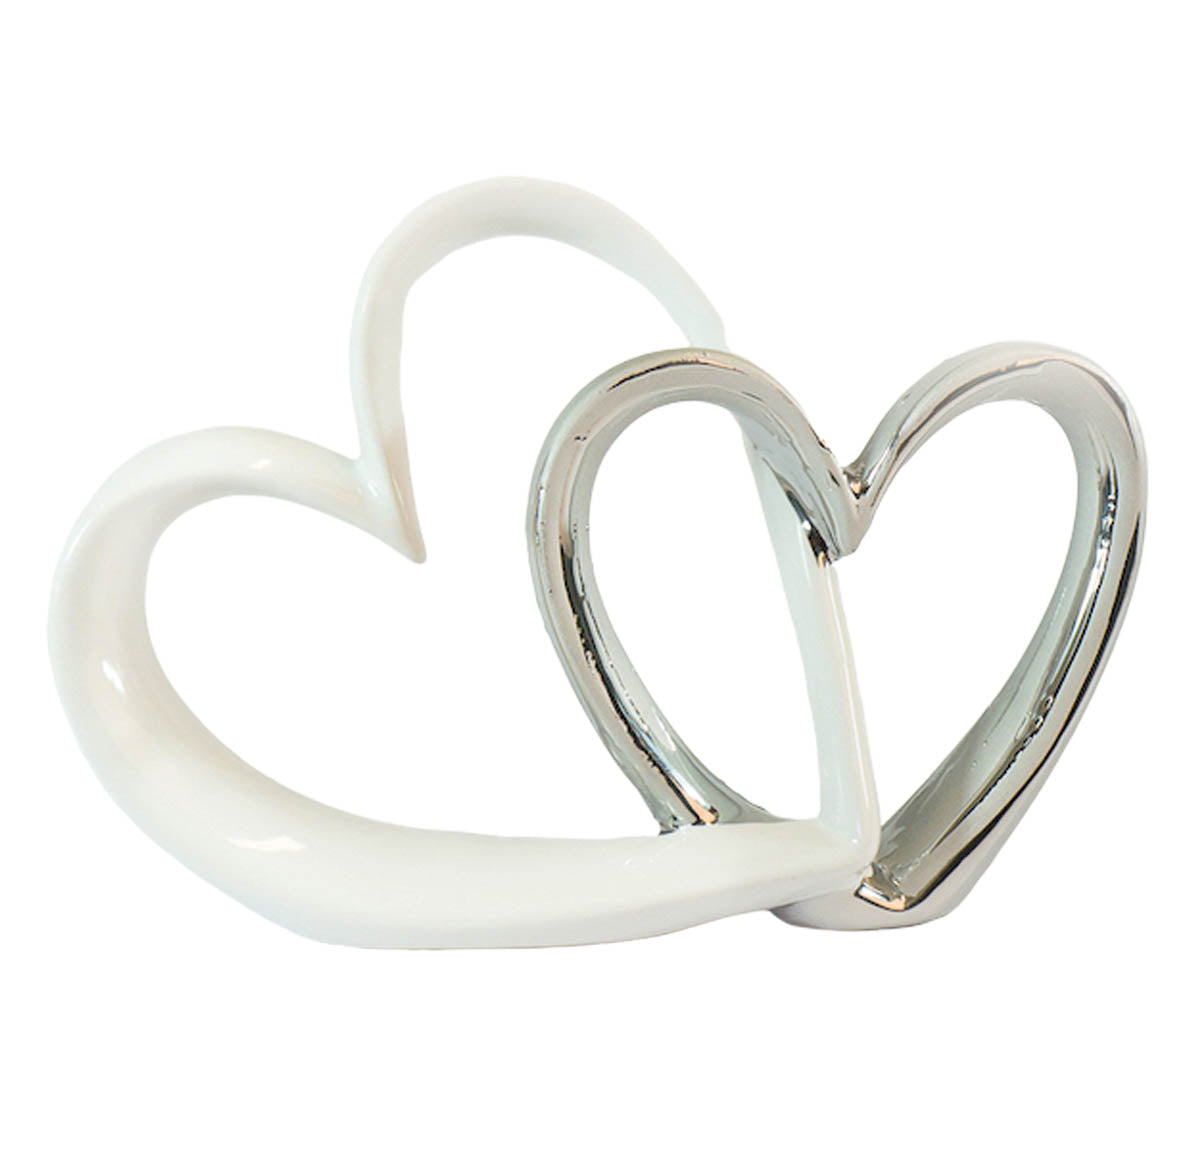 Ceramic Hearts Together - White & Silver | Home Decor